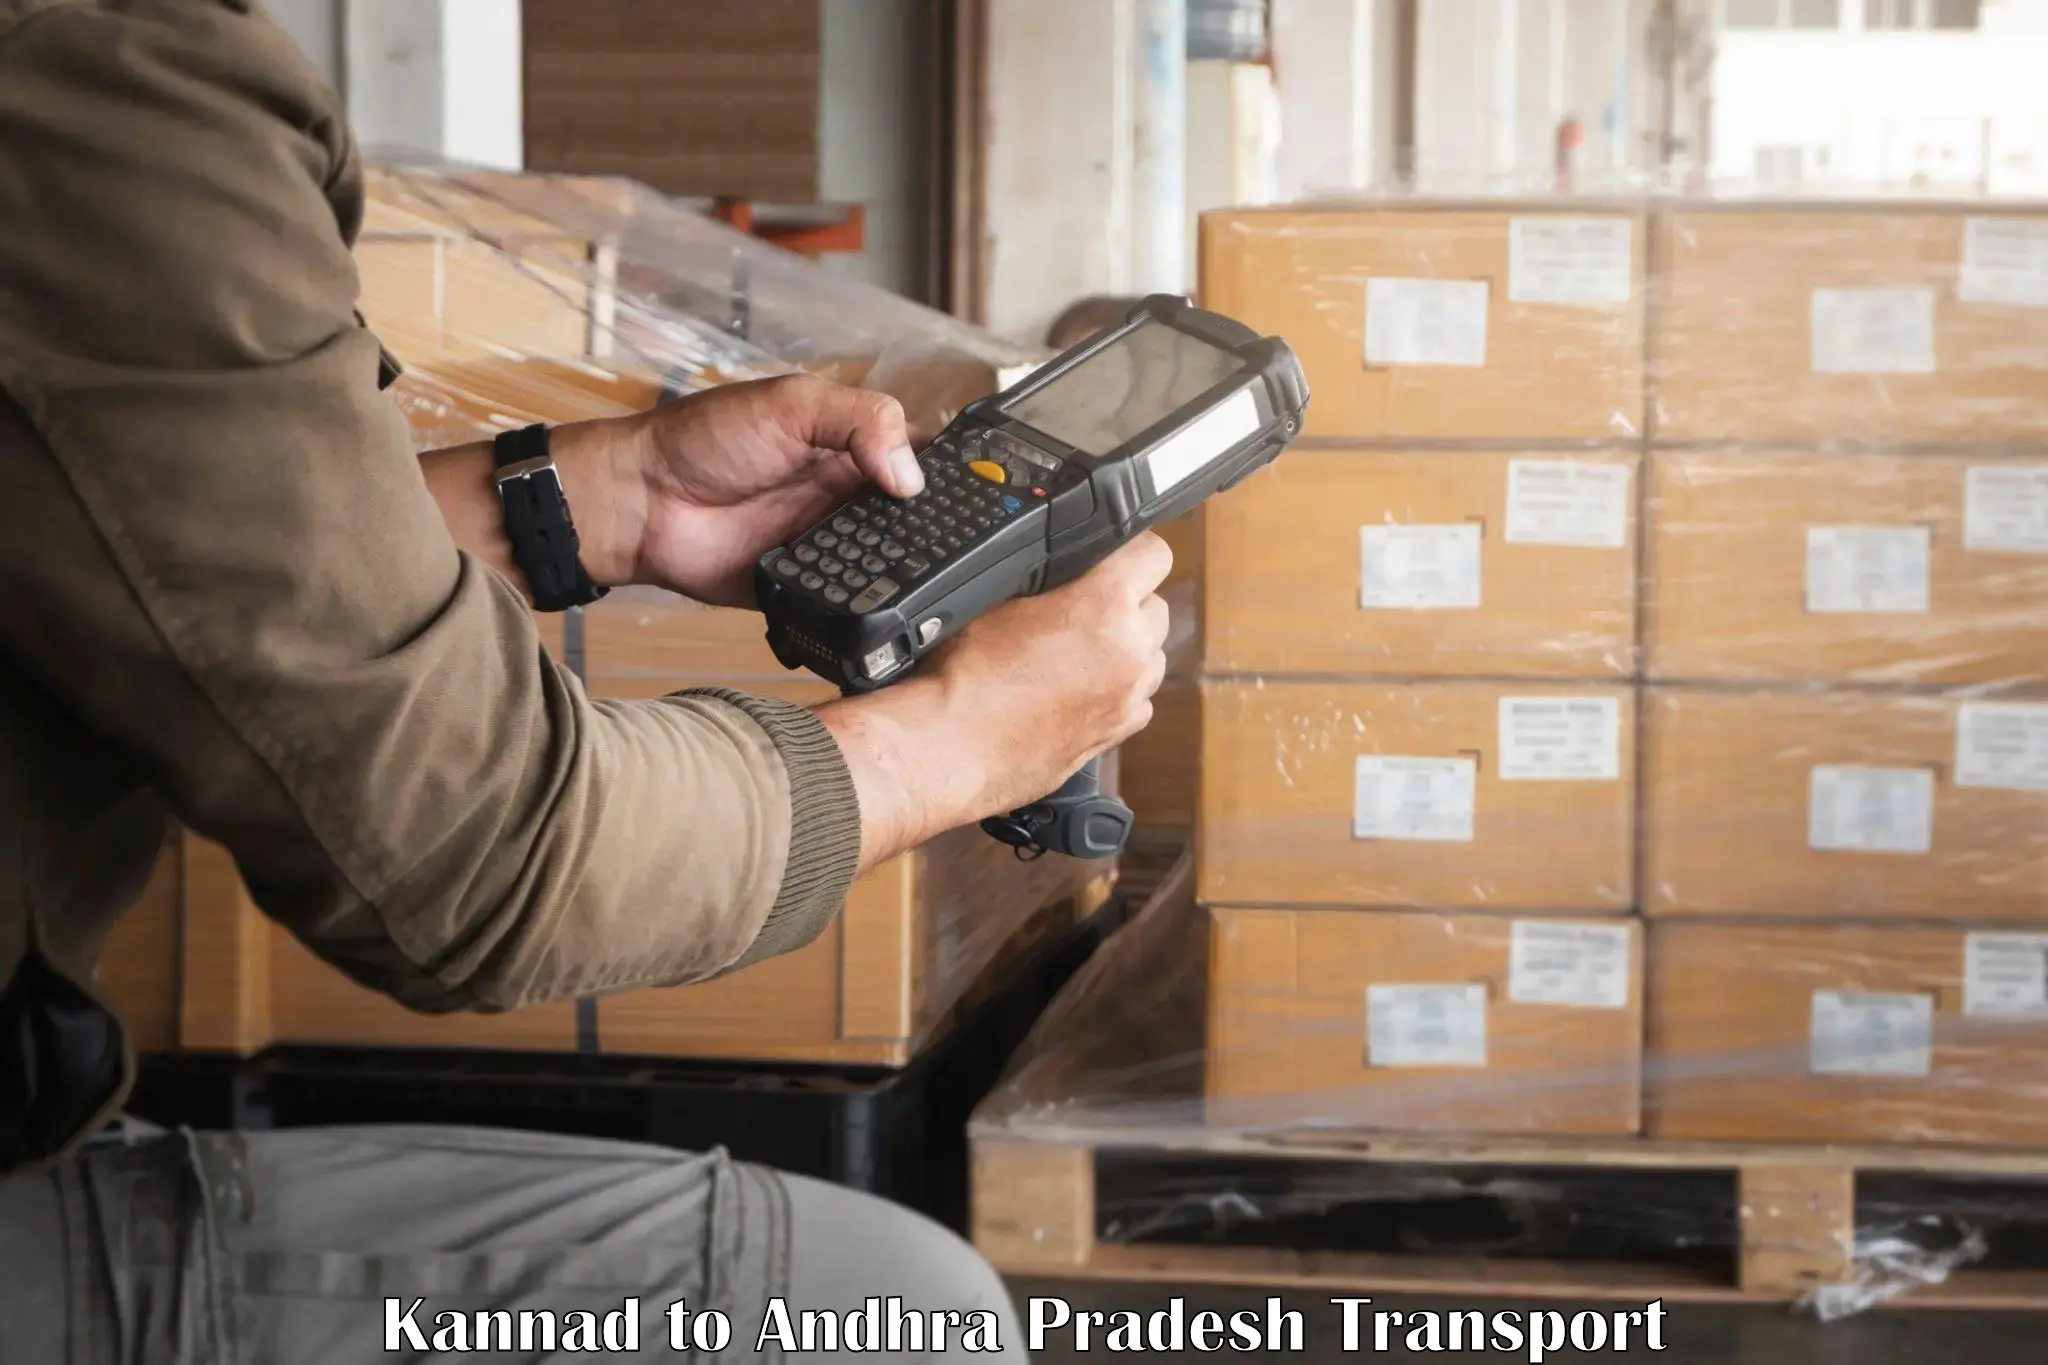 Express transport services in Kannad to Puttur Tirupati